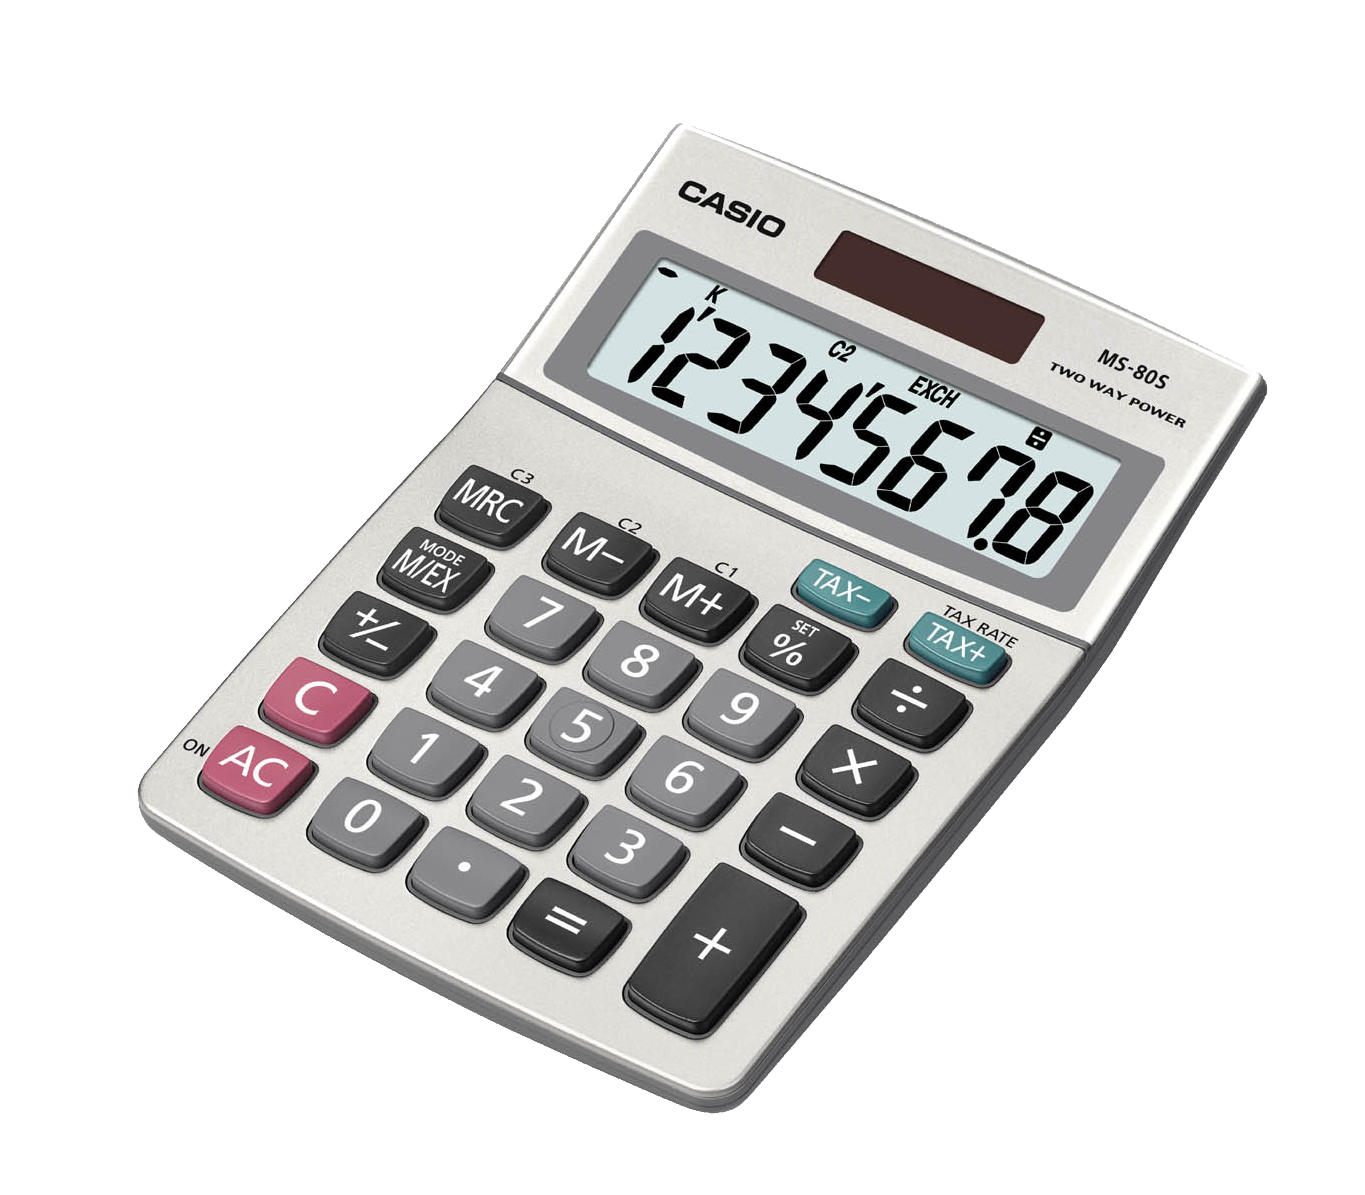 Calculator PNG in Transparent pngteam.com